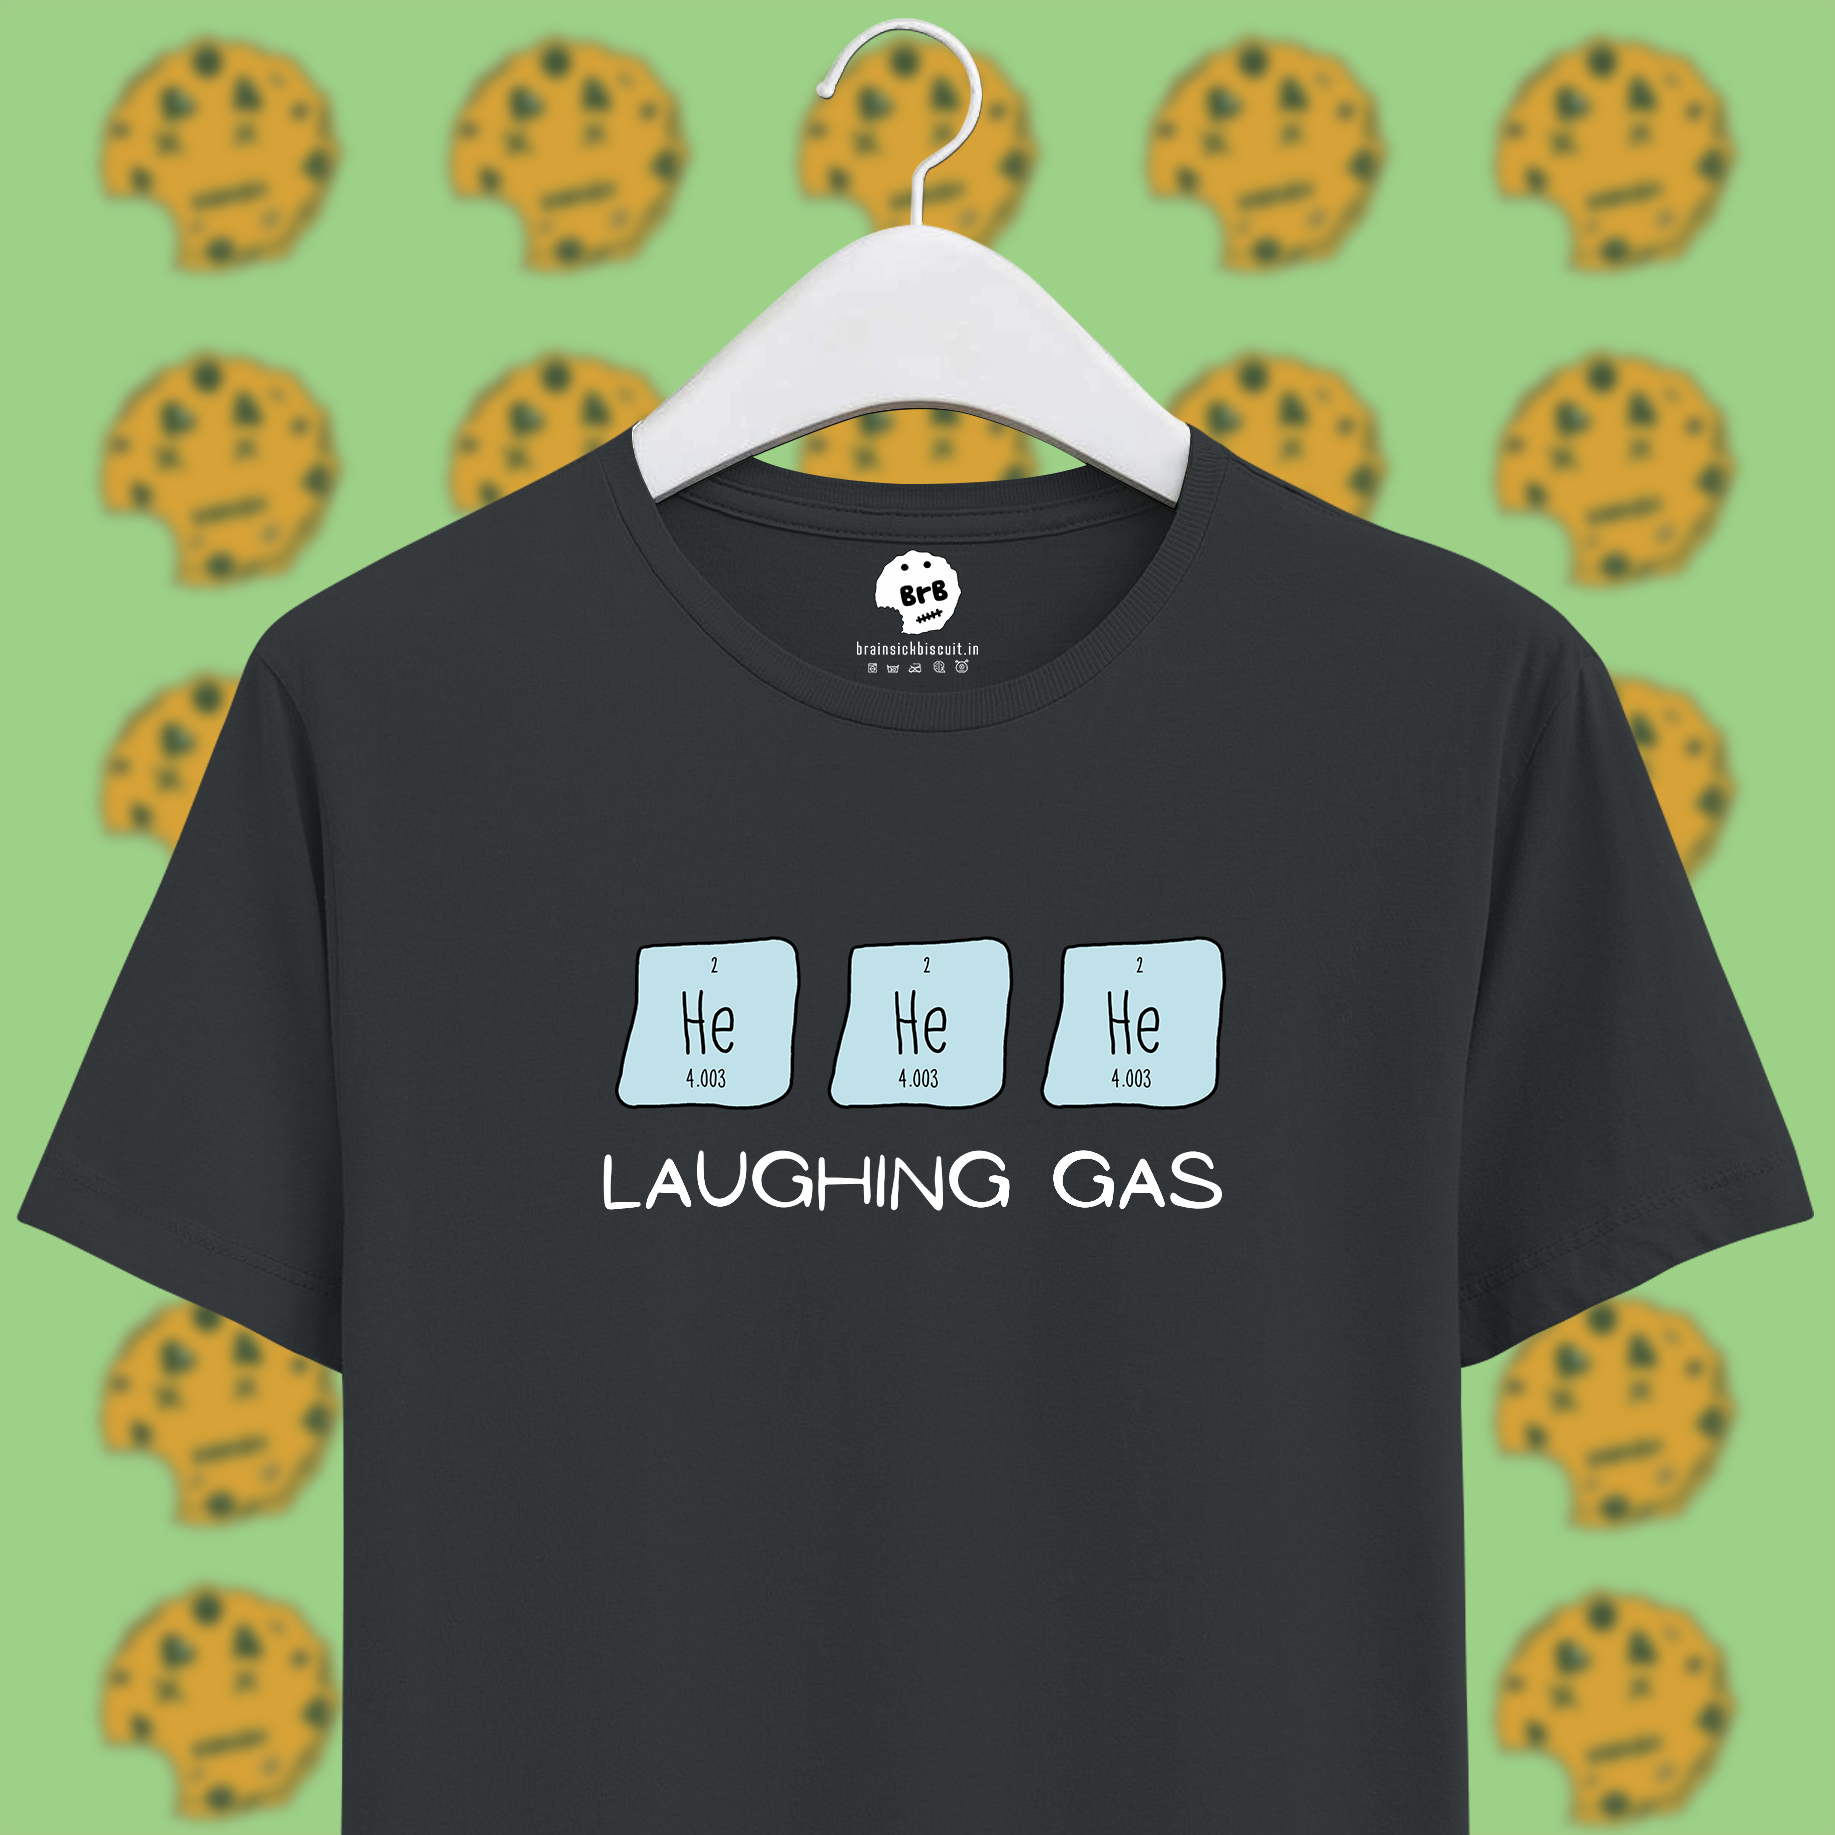 Laughing gas helium joke pun on steel grey unisex half sleeves unisex cotton t-shirt.